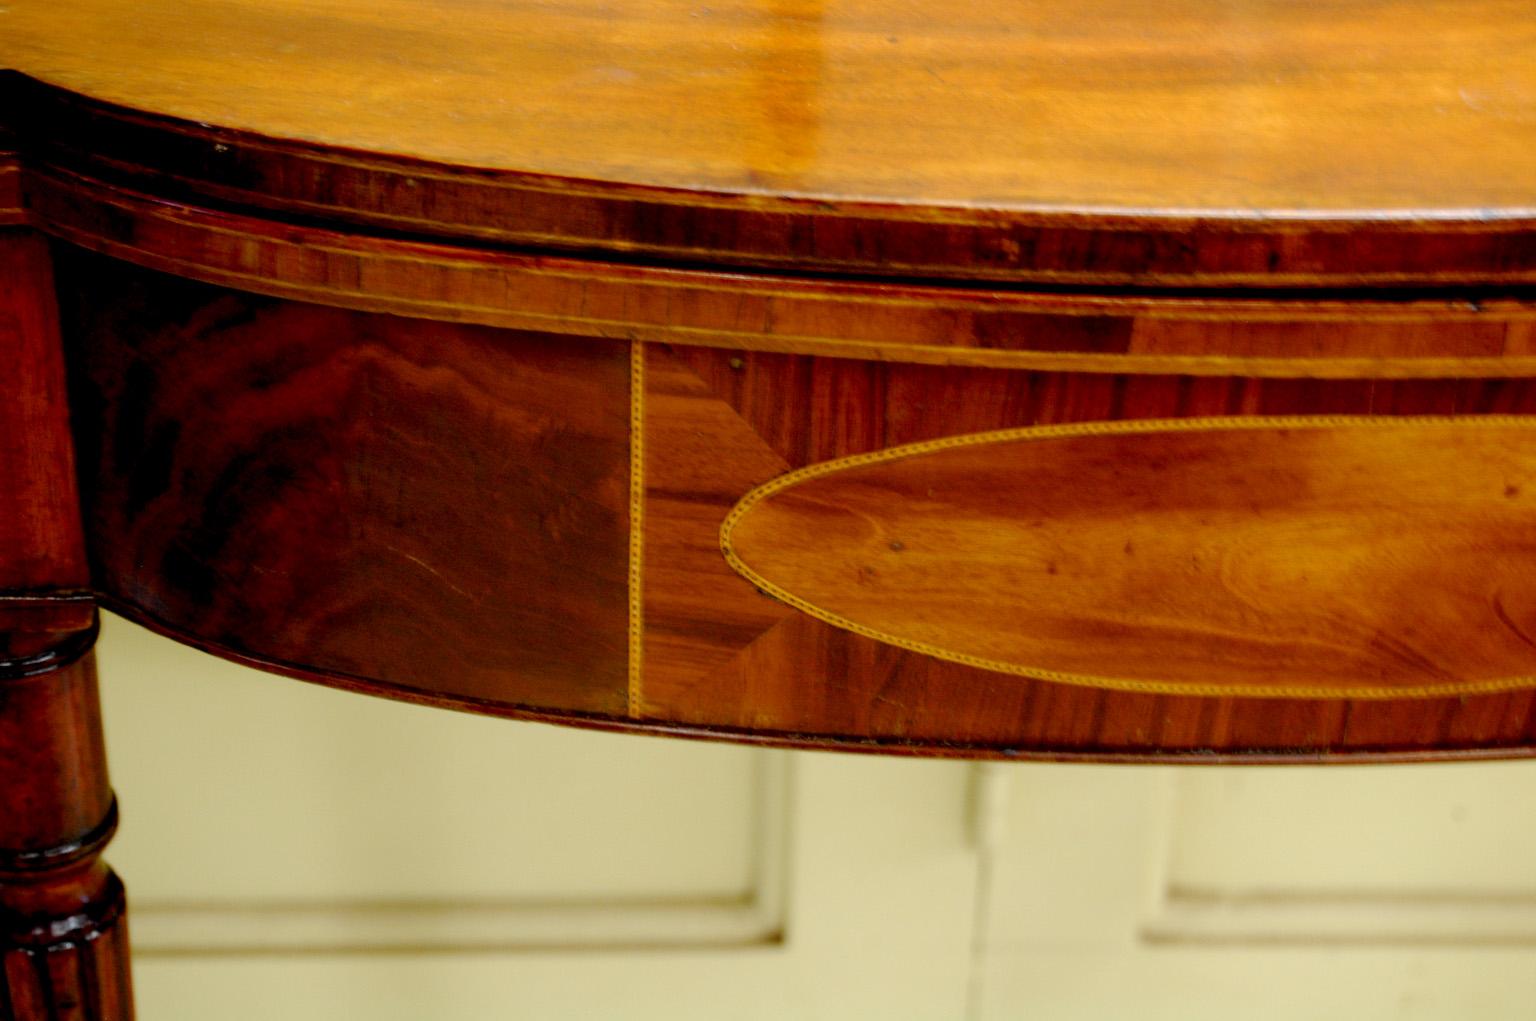 18th Century American Federal Serpentine Inlaid Tea Table Attributed to Nehemiah Adams